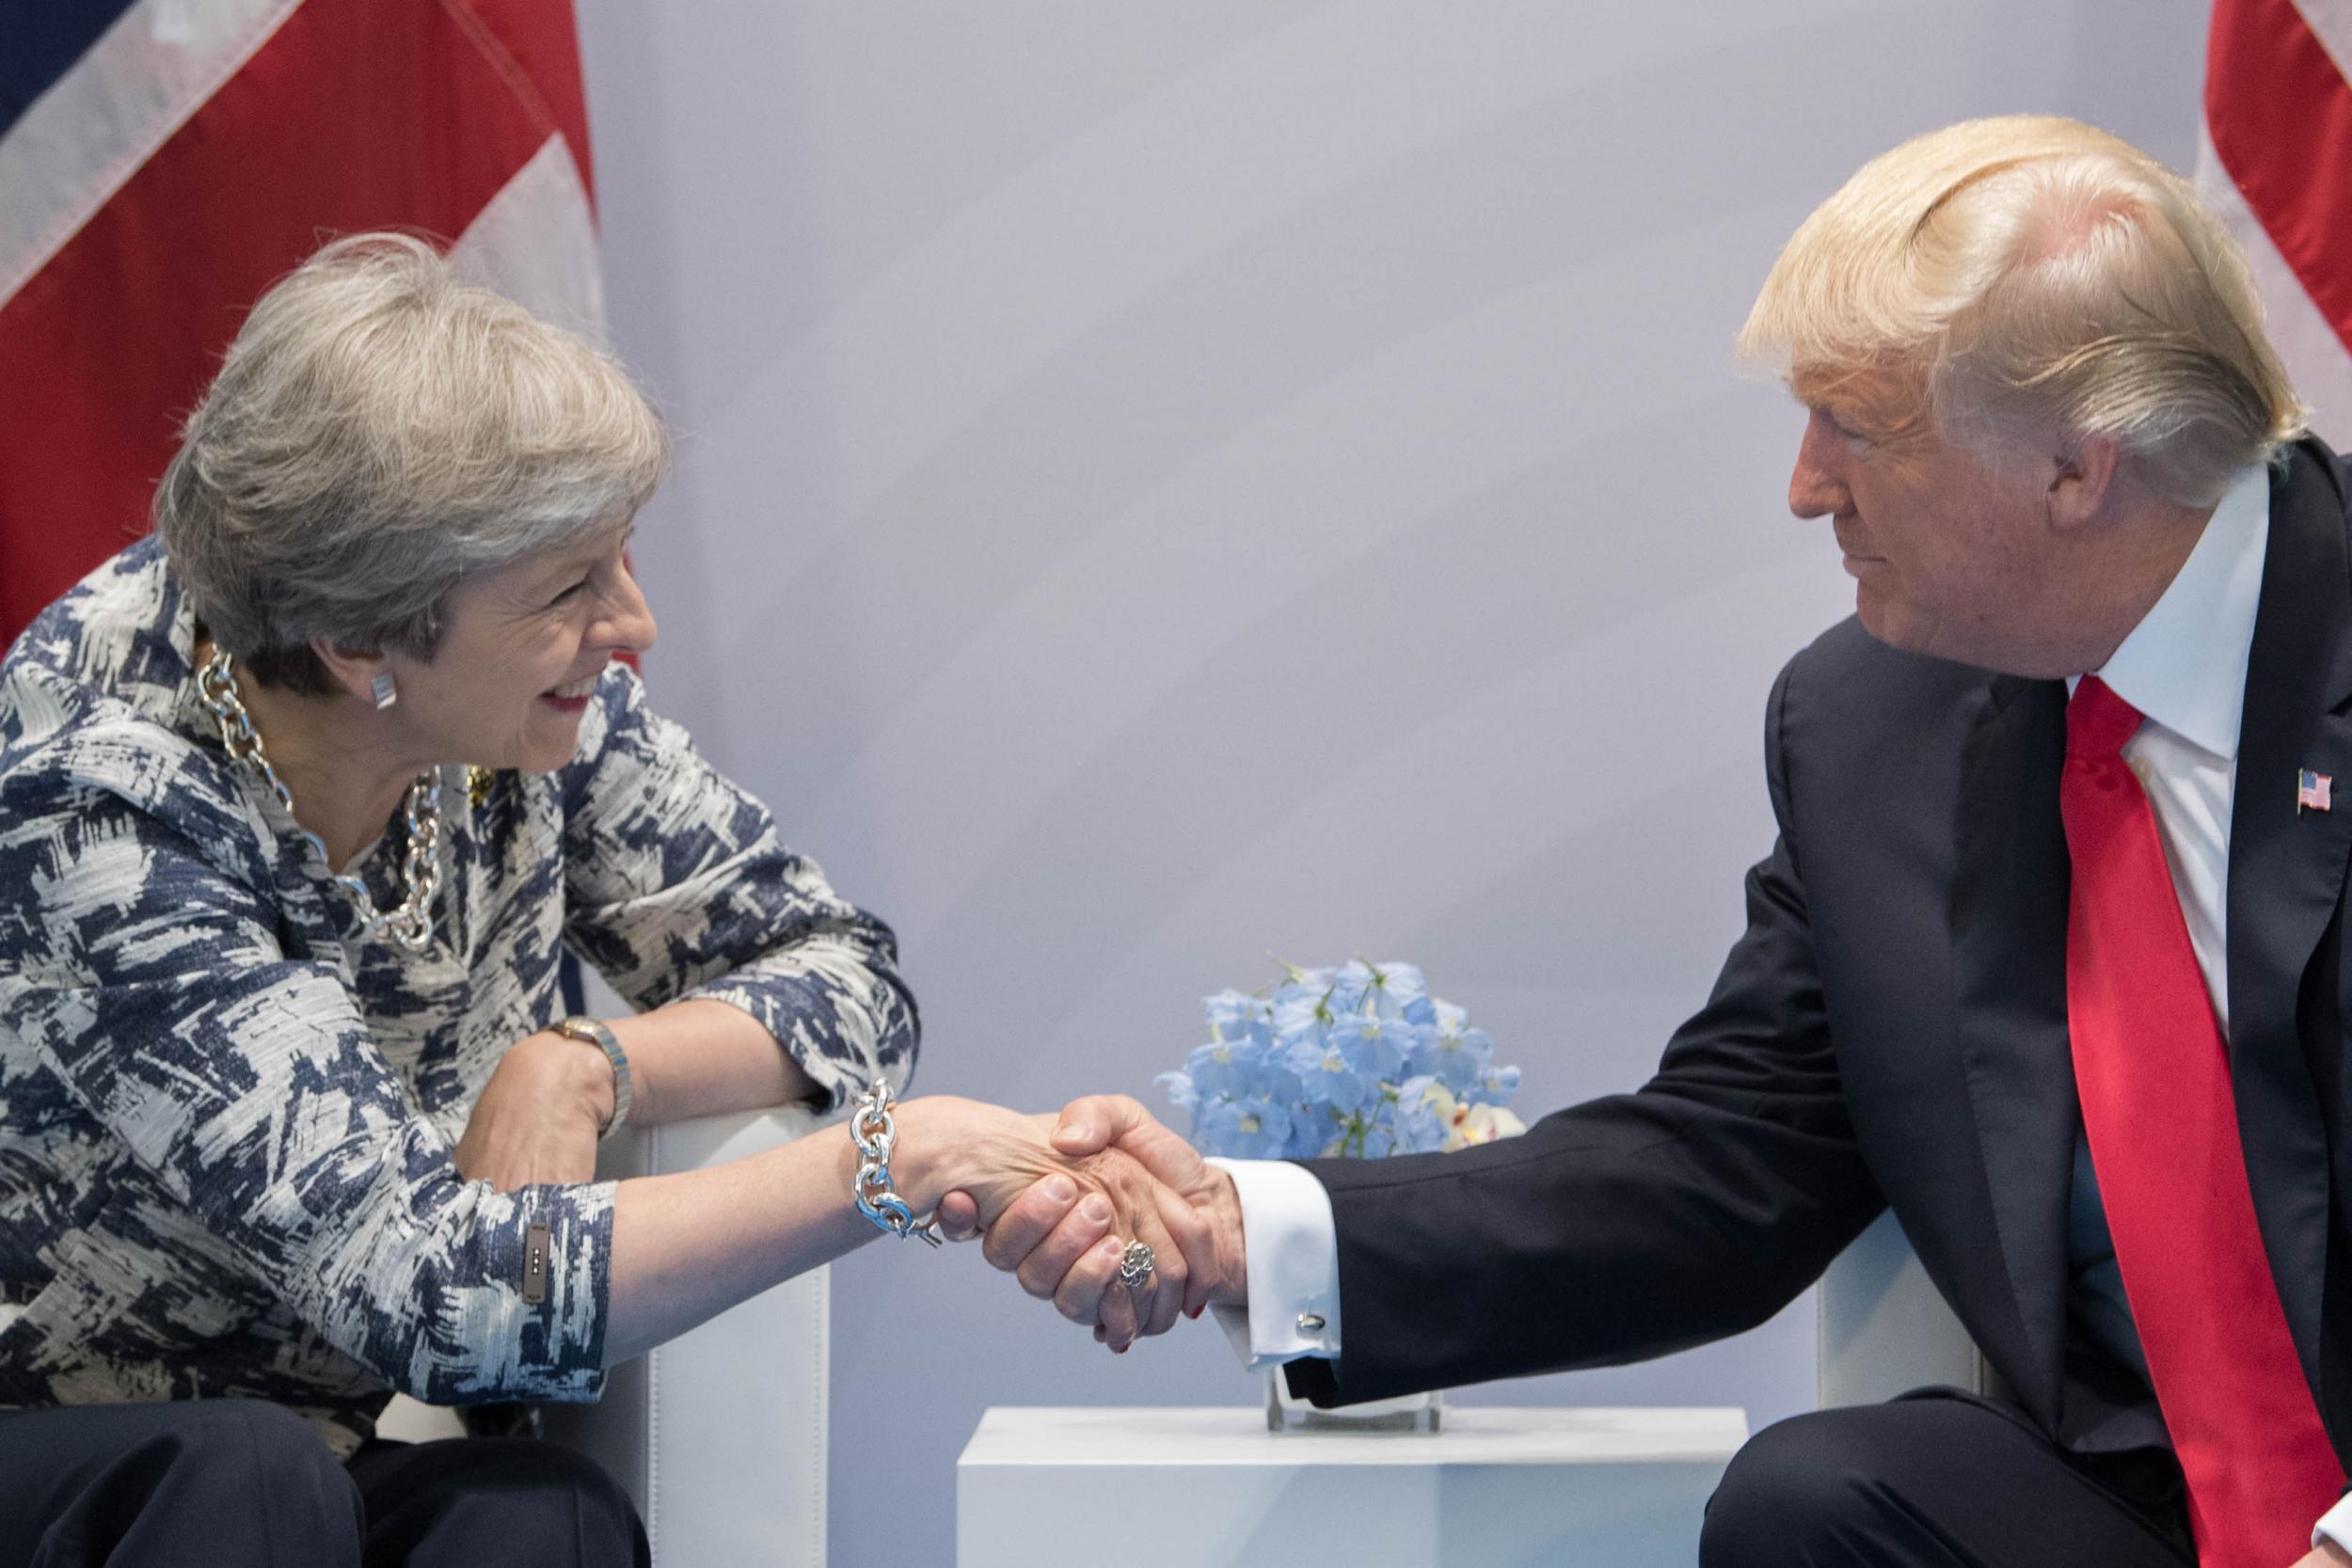 Theresa May met Donald Trump at the G20 summit in Hamburg last month